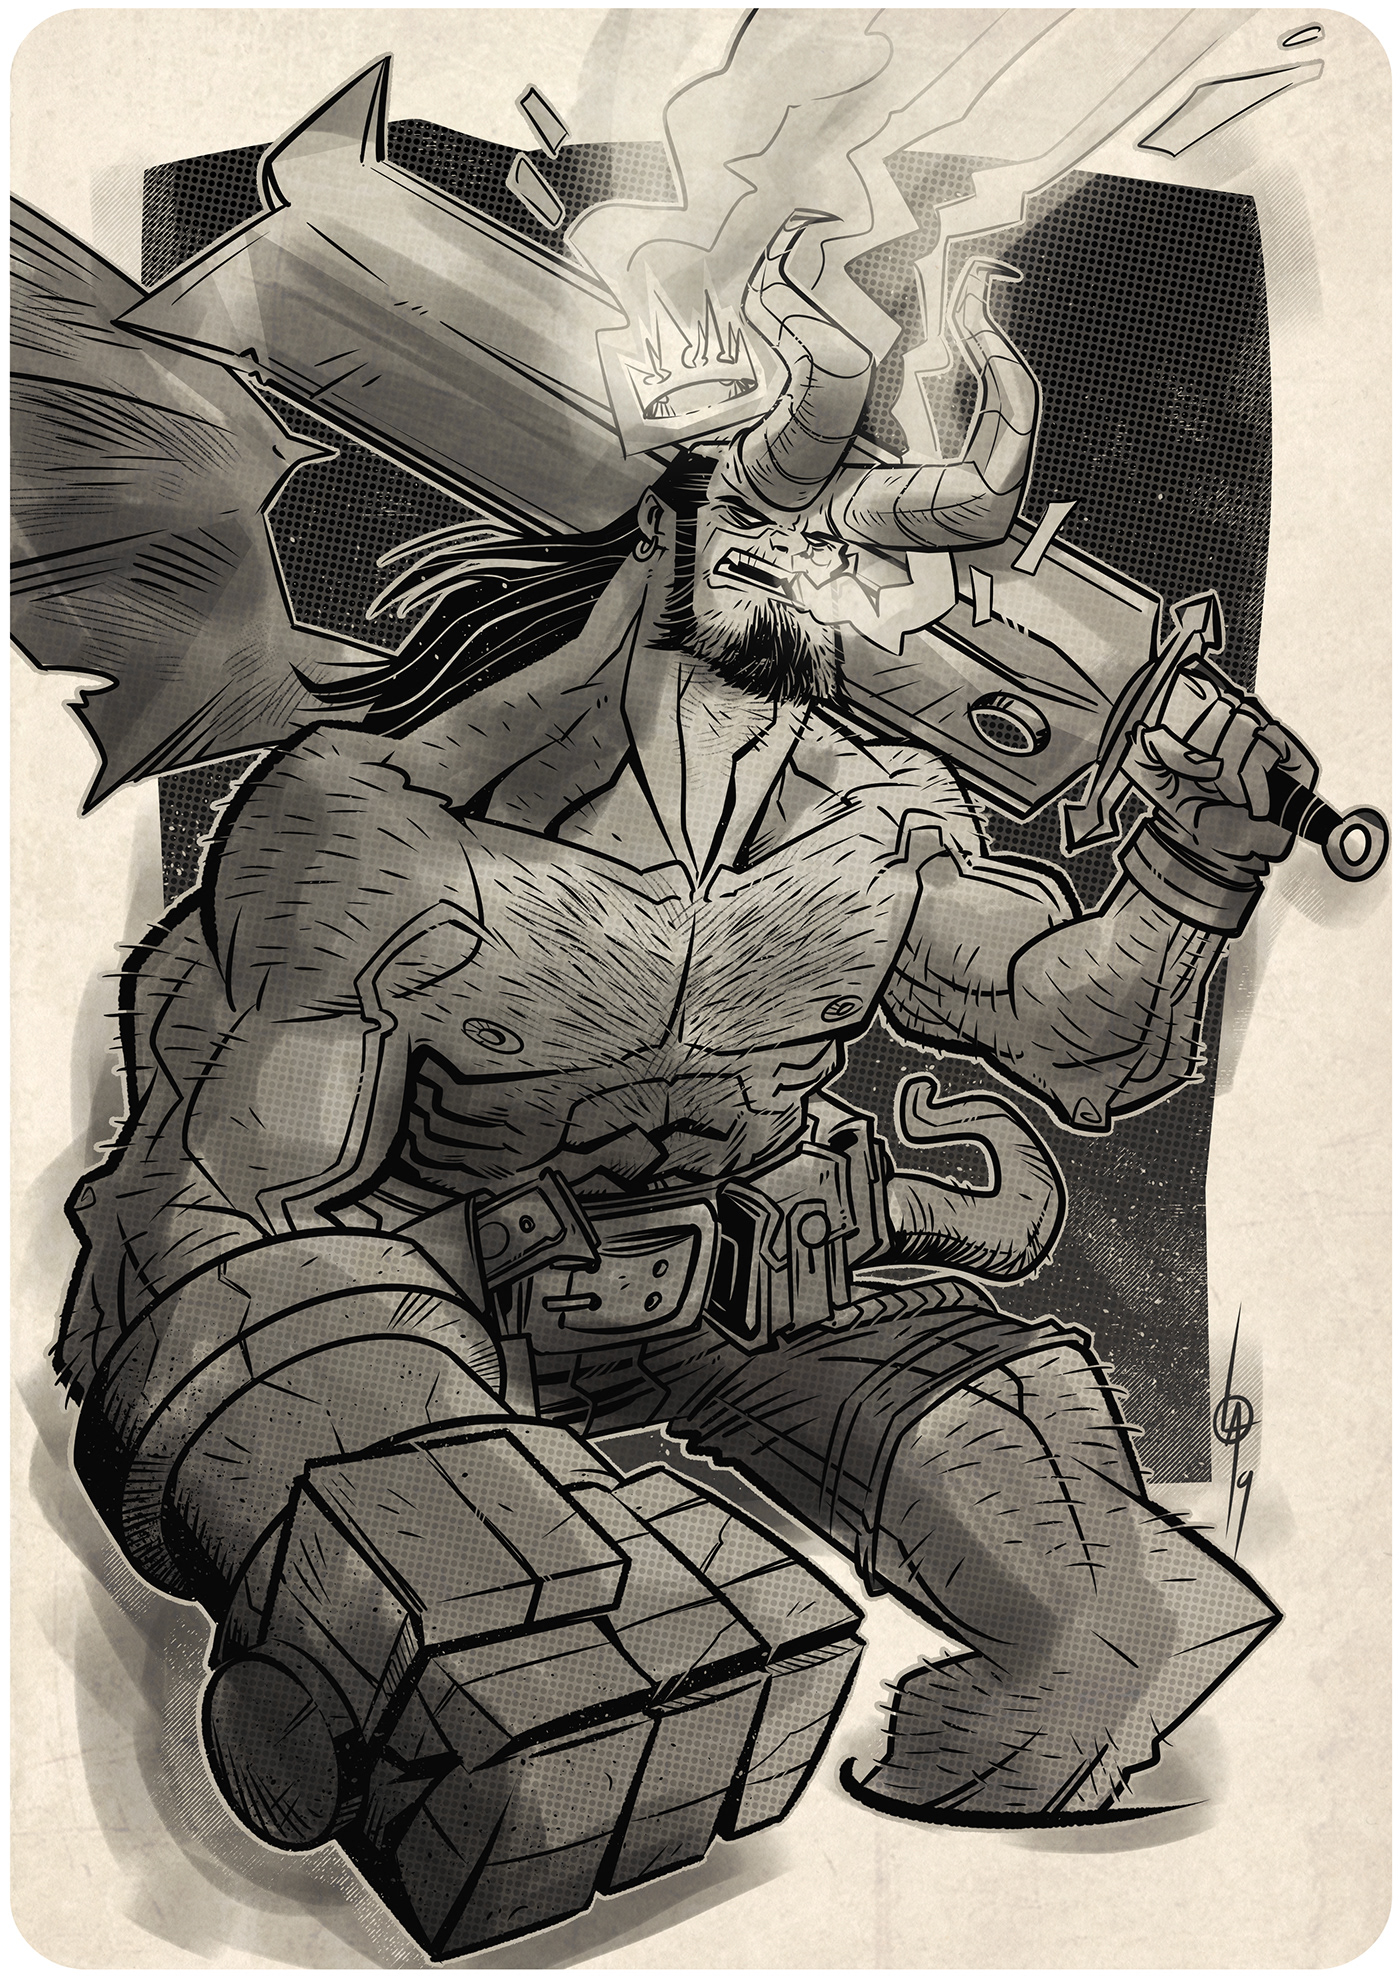 Hellboy mike mignola fanart ComicArt ILLUSTRATION  Paranormal Supernatural fantasy Character design  darkfantasy